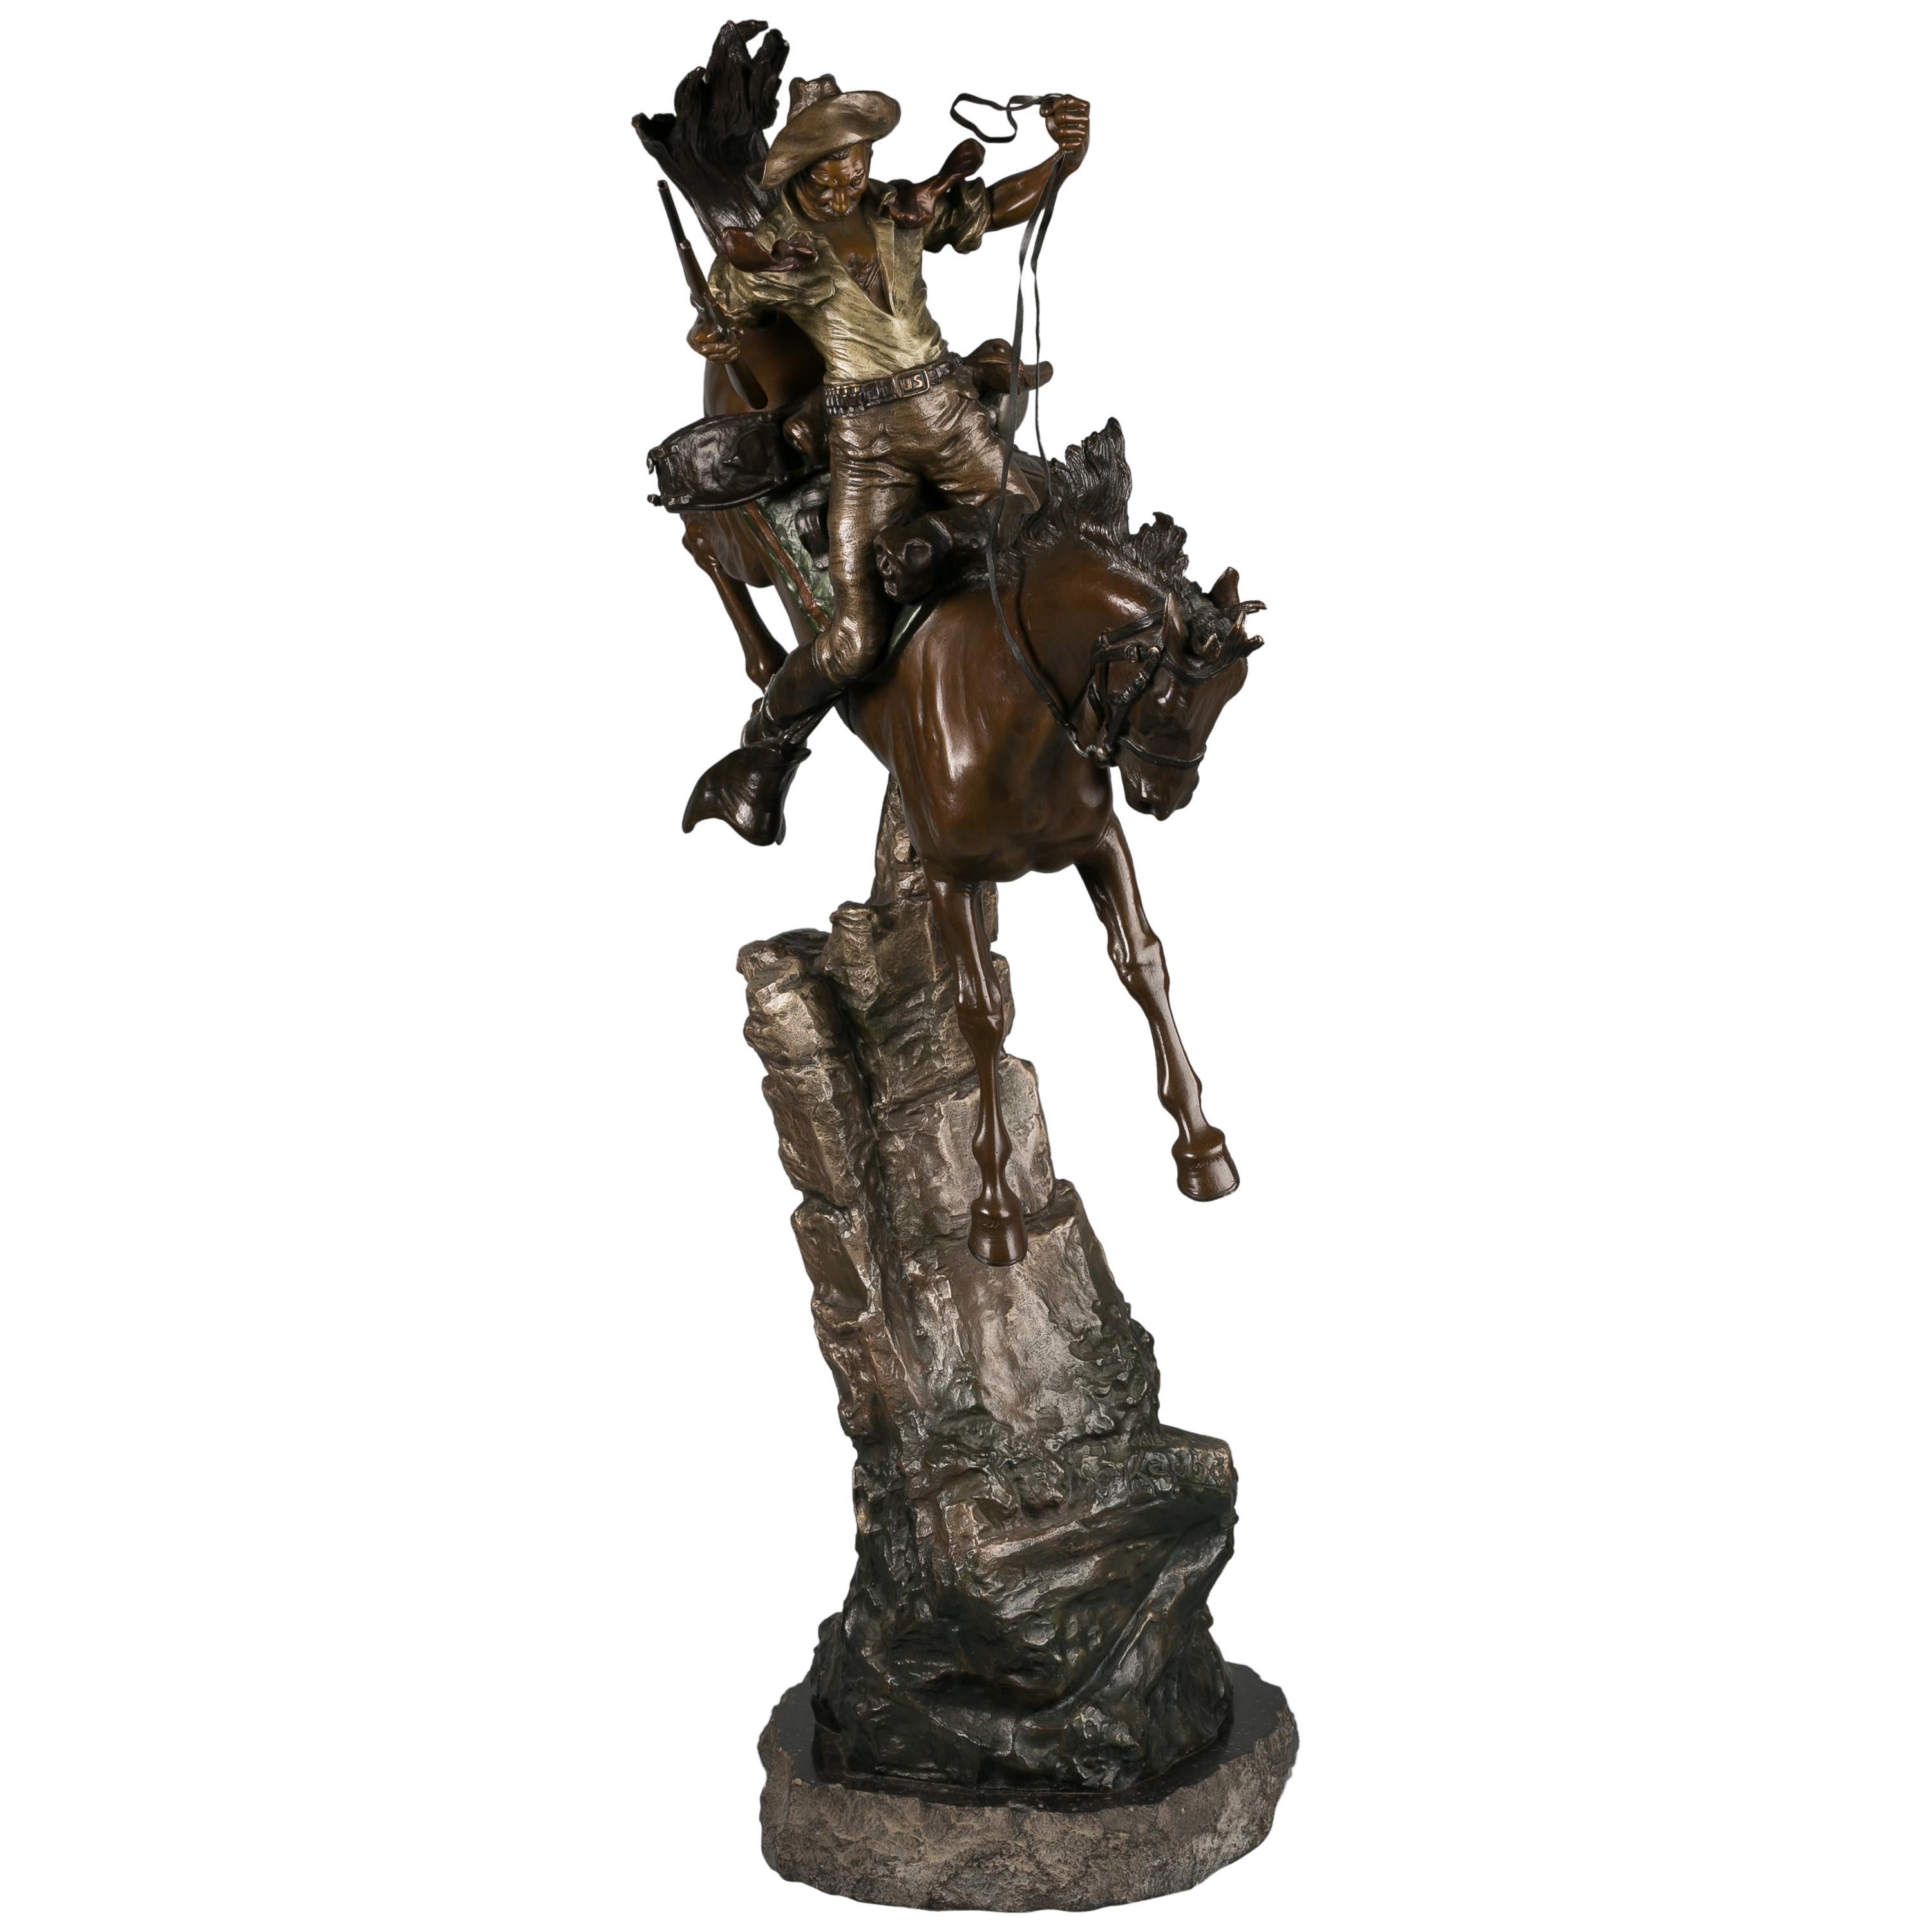 Desperado - sculpture autrichienne en bronze polychrome de Carl Kauba